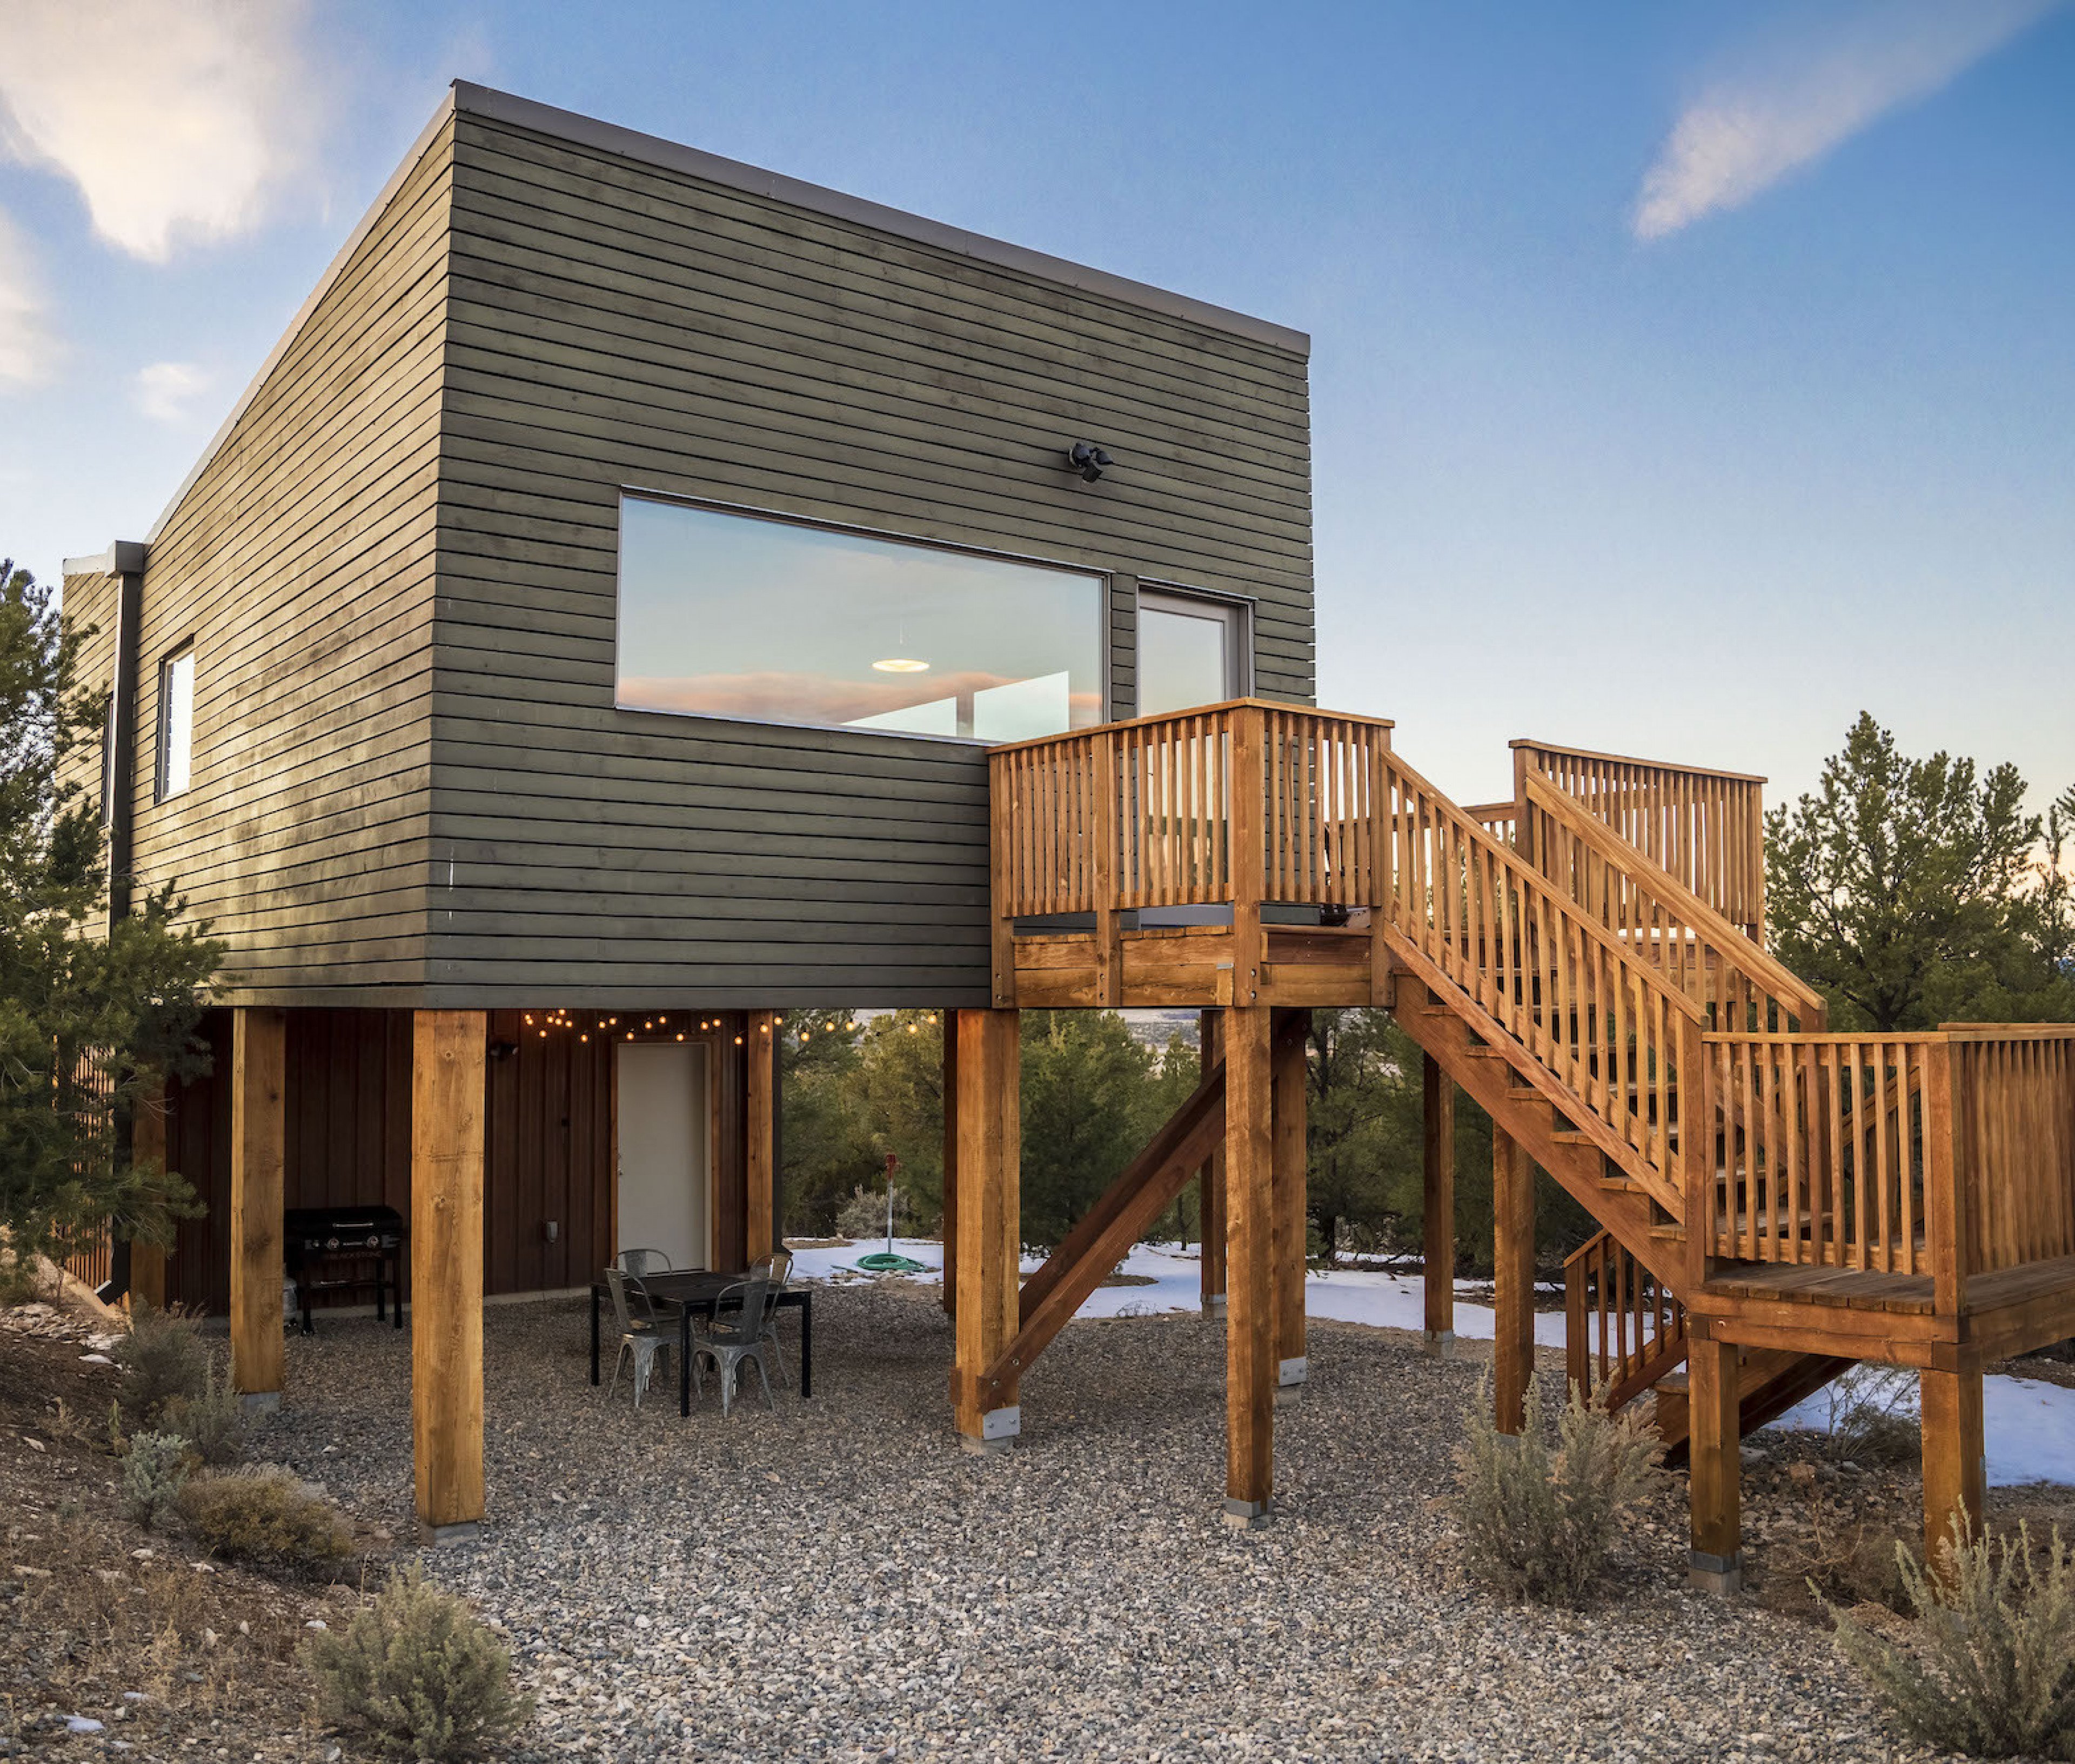 Taos Ski Valley 29 tiny cabin rentals